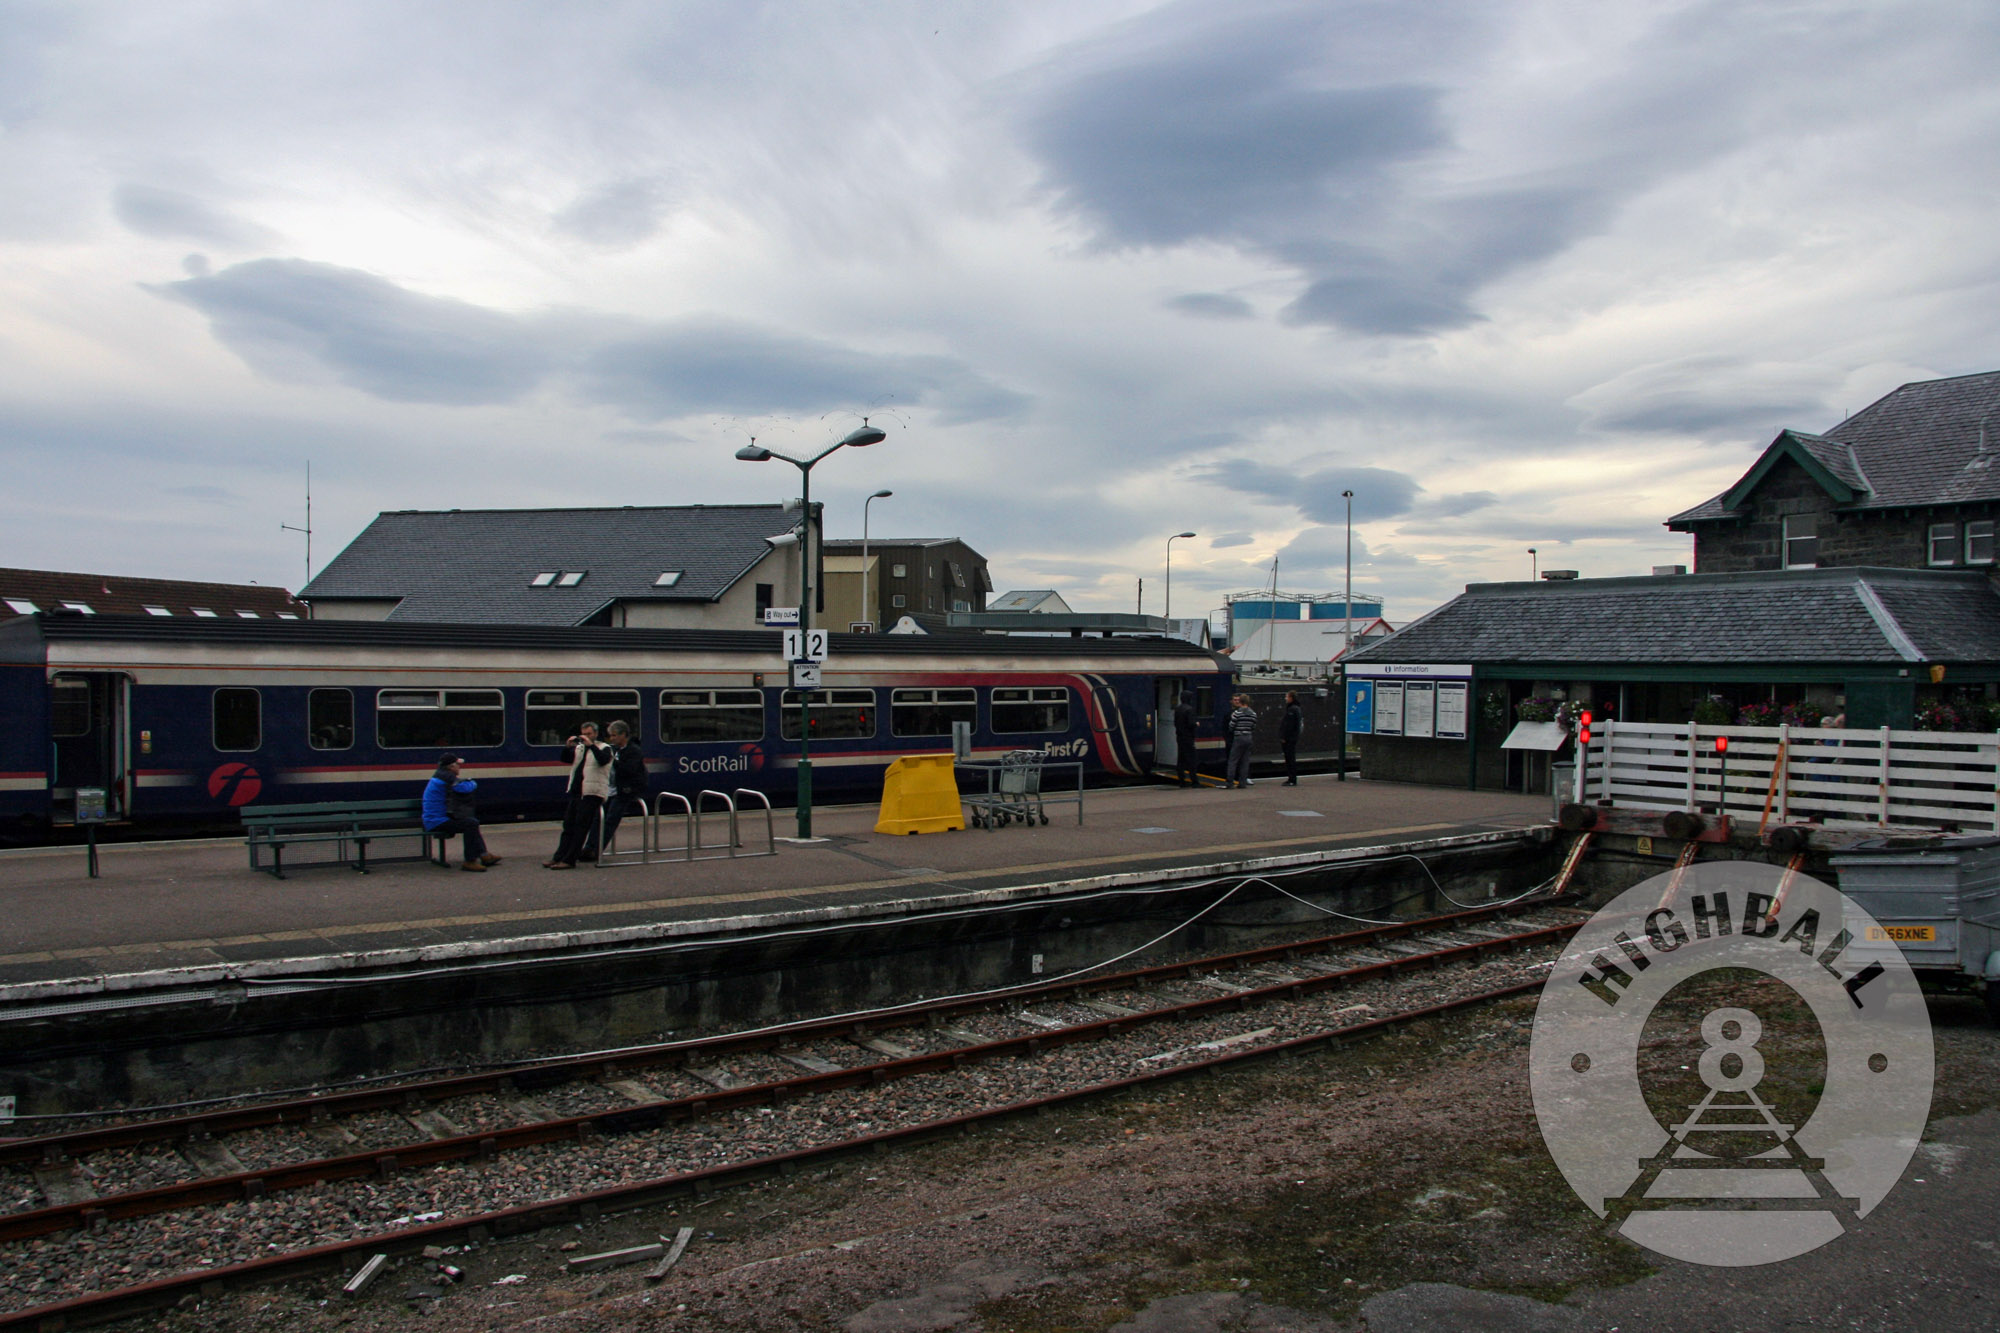 Mallaig Station, Mallaig, Scotland, UK, 2010.